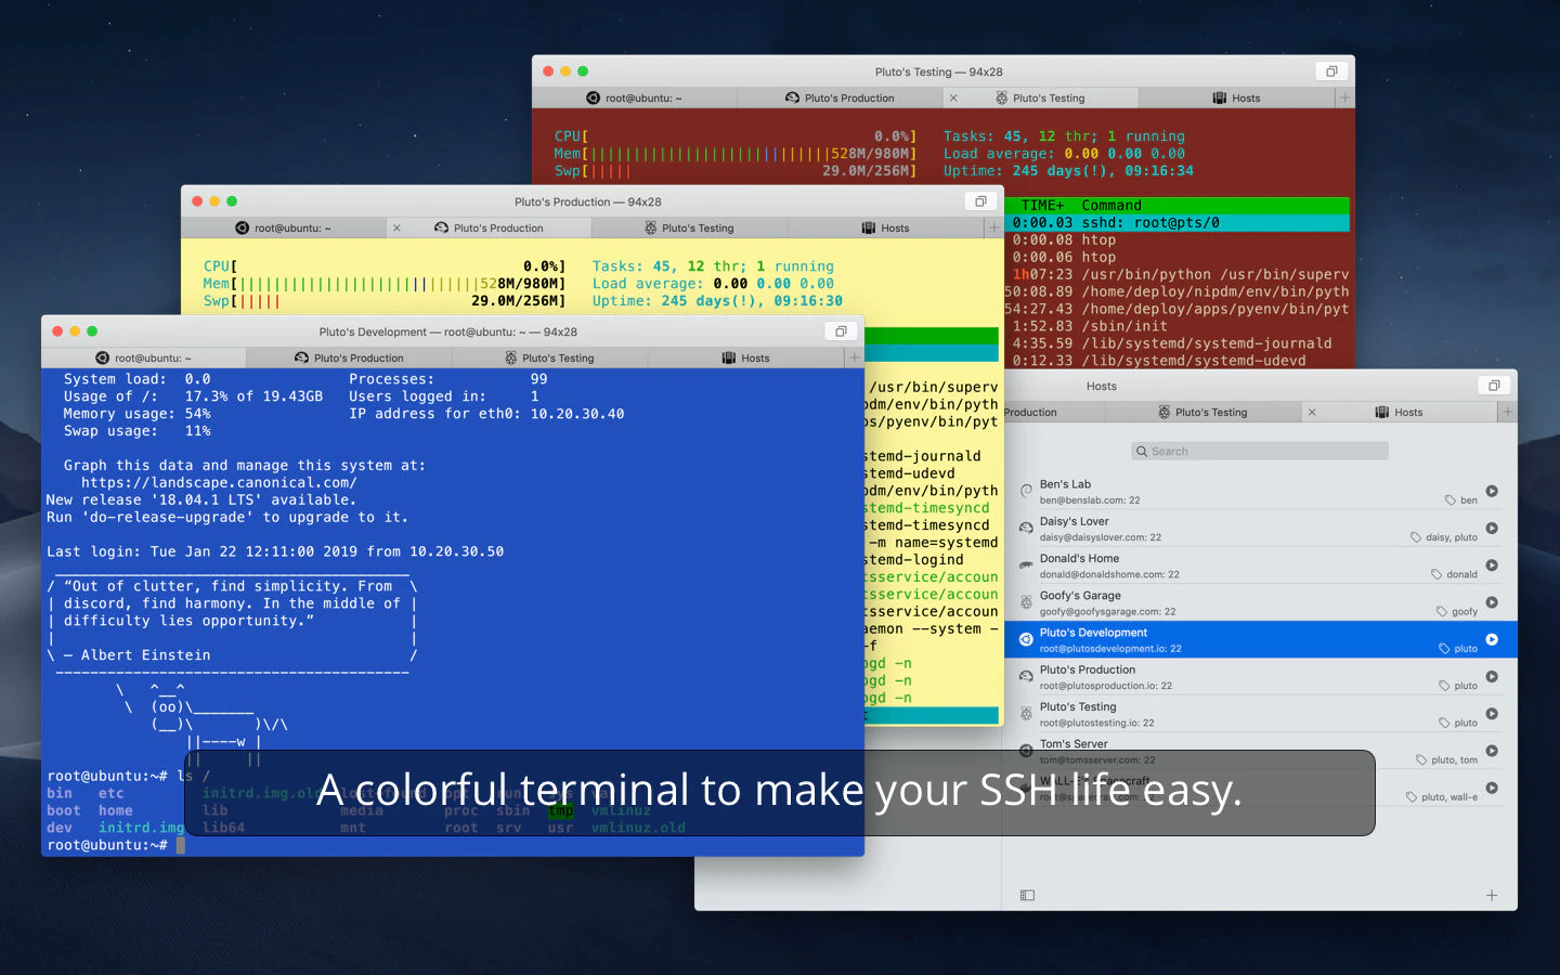 A colorful terminal app